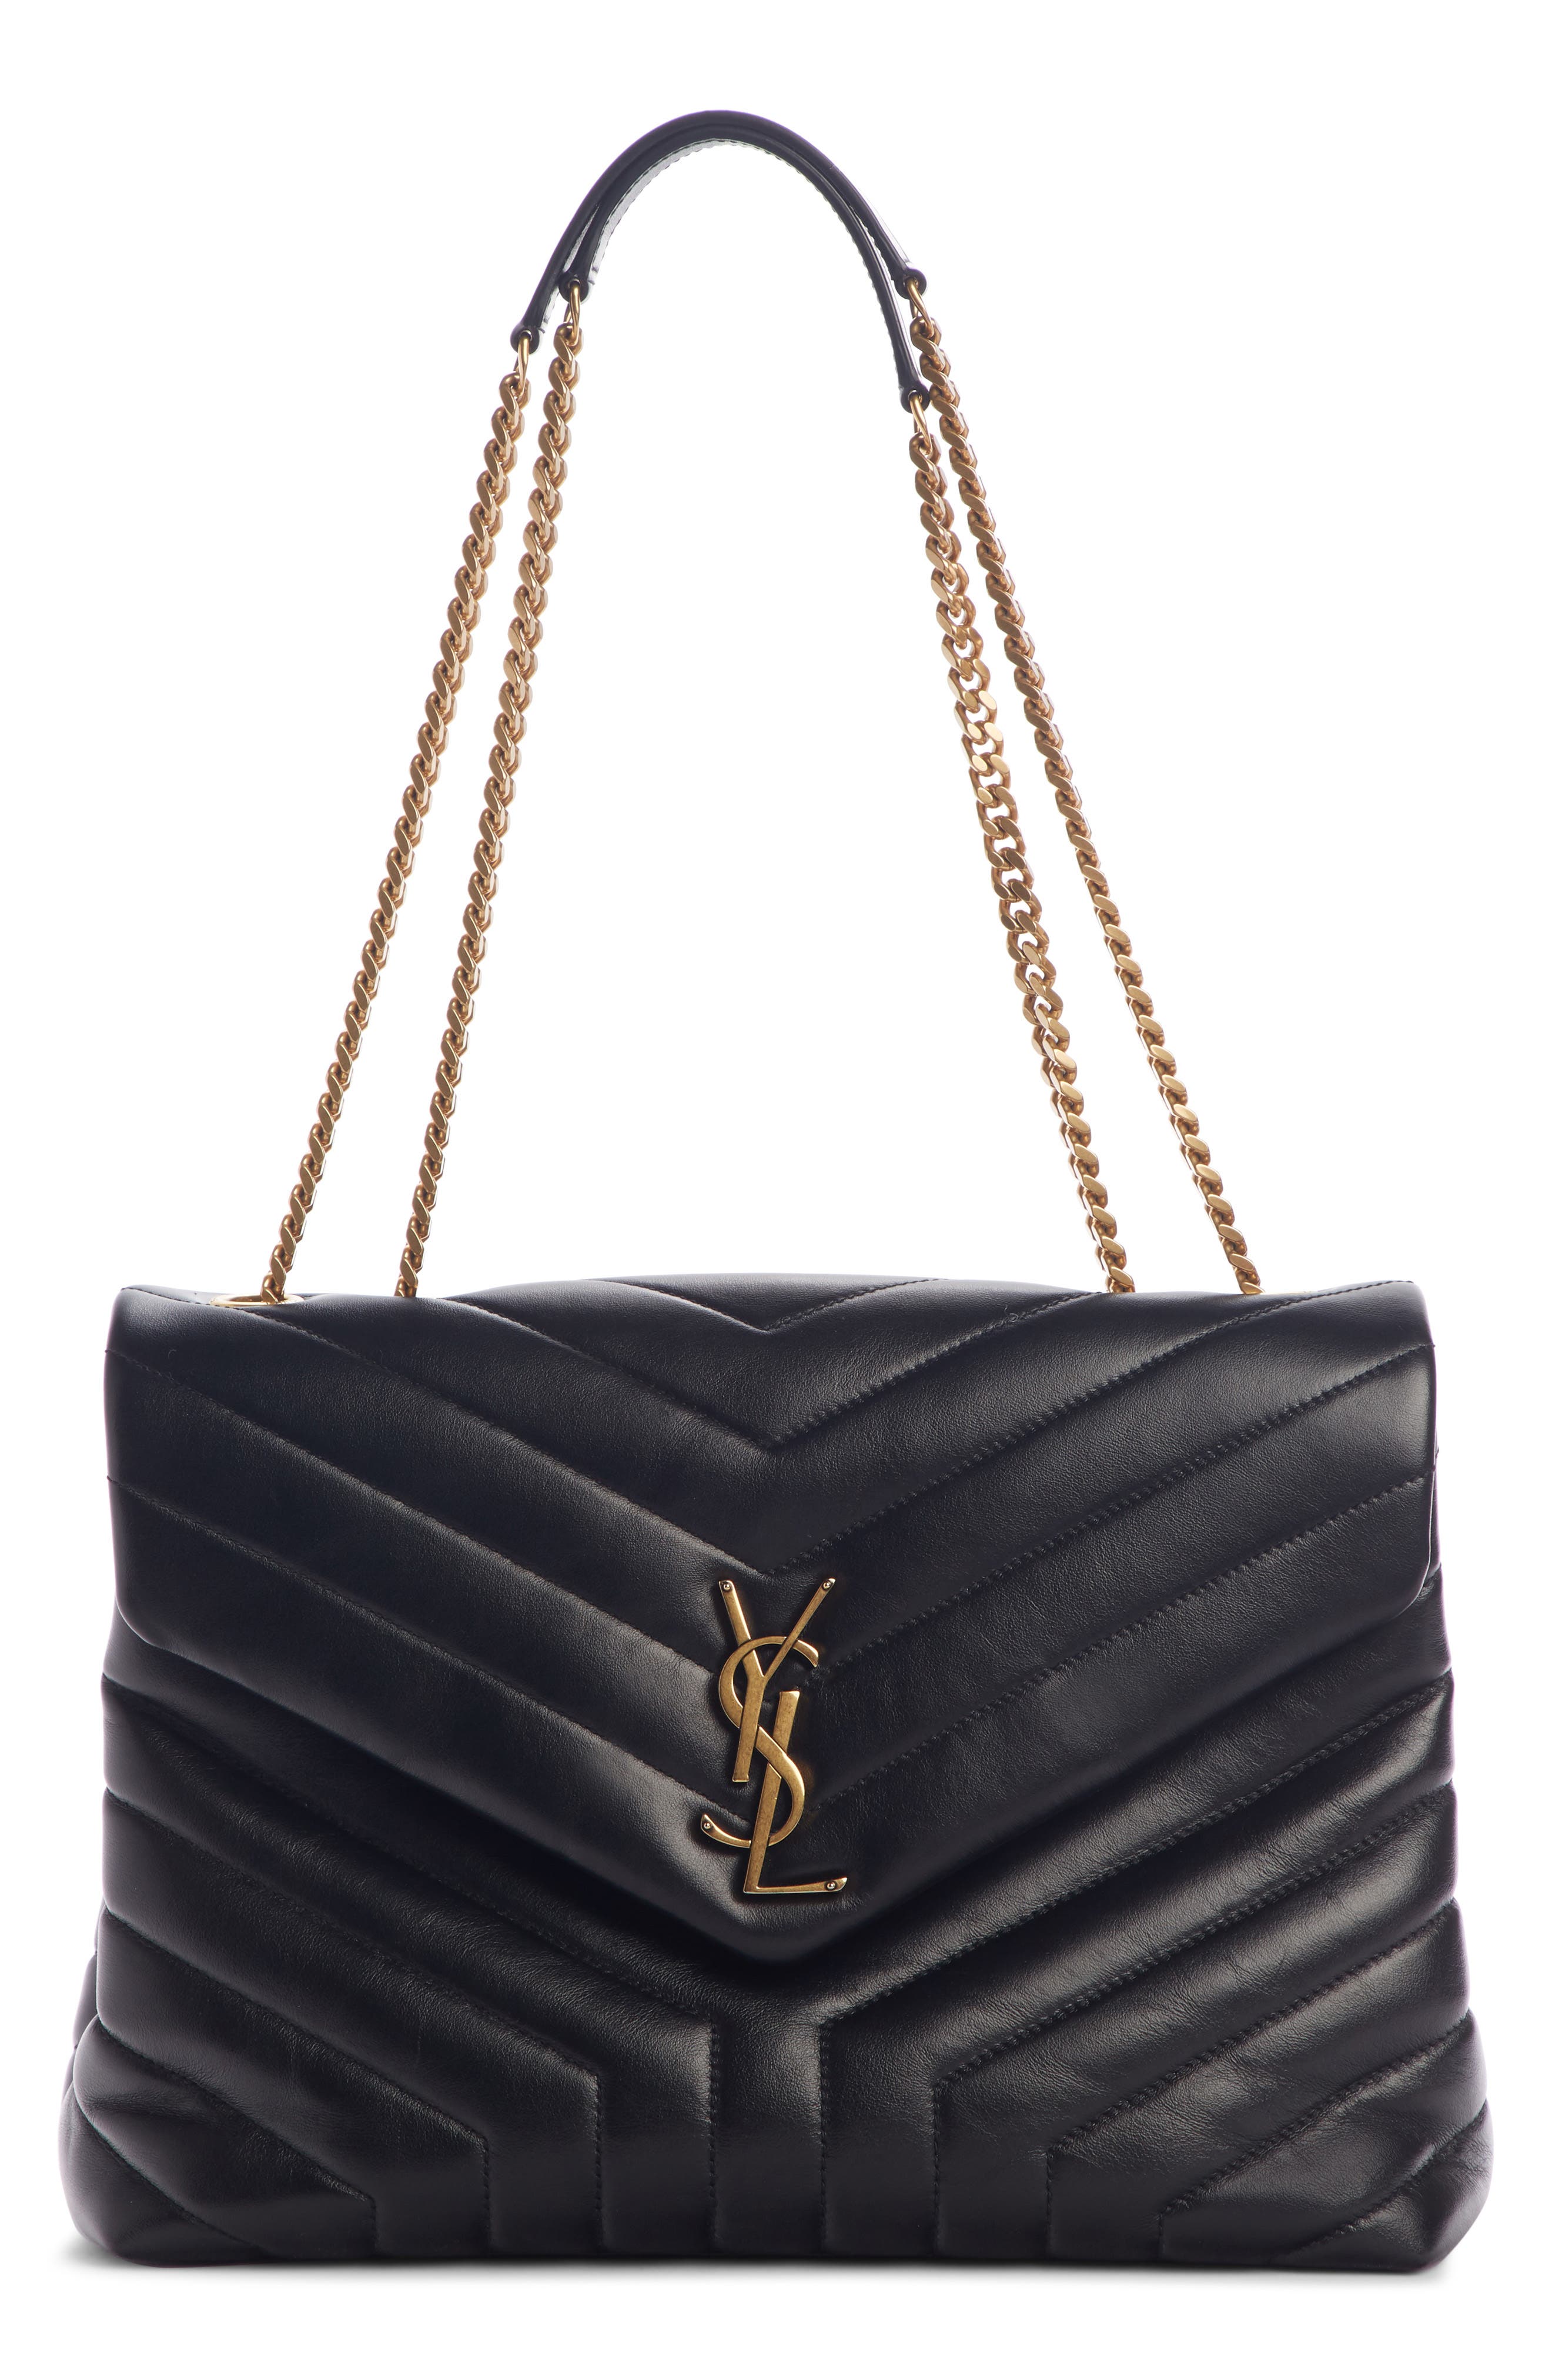 simple black crossbody purse